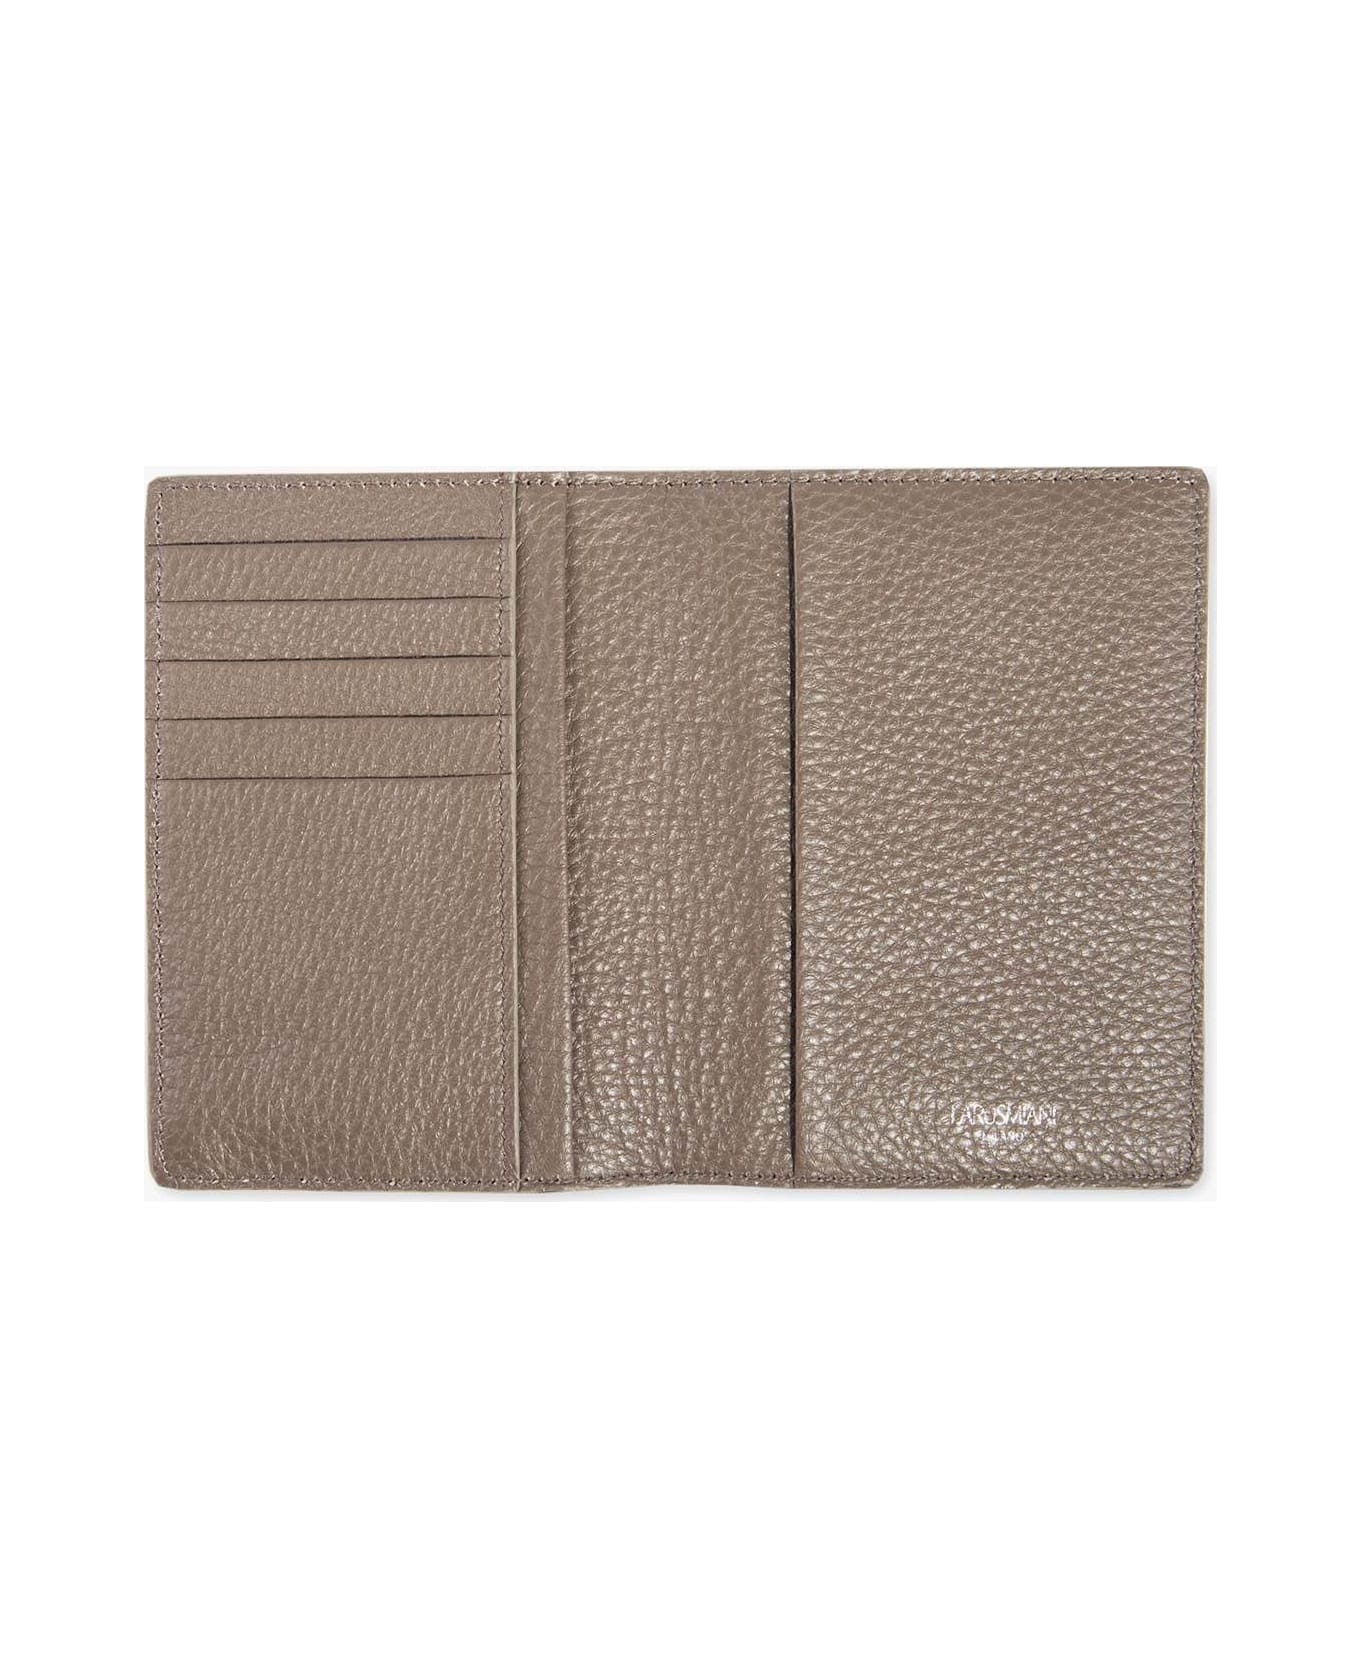 Larusmiani Passport Cover 'fiumicino' Wallet - Brown